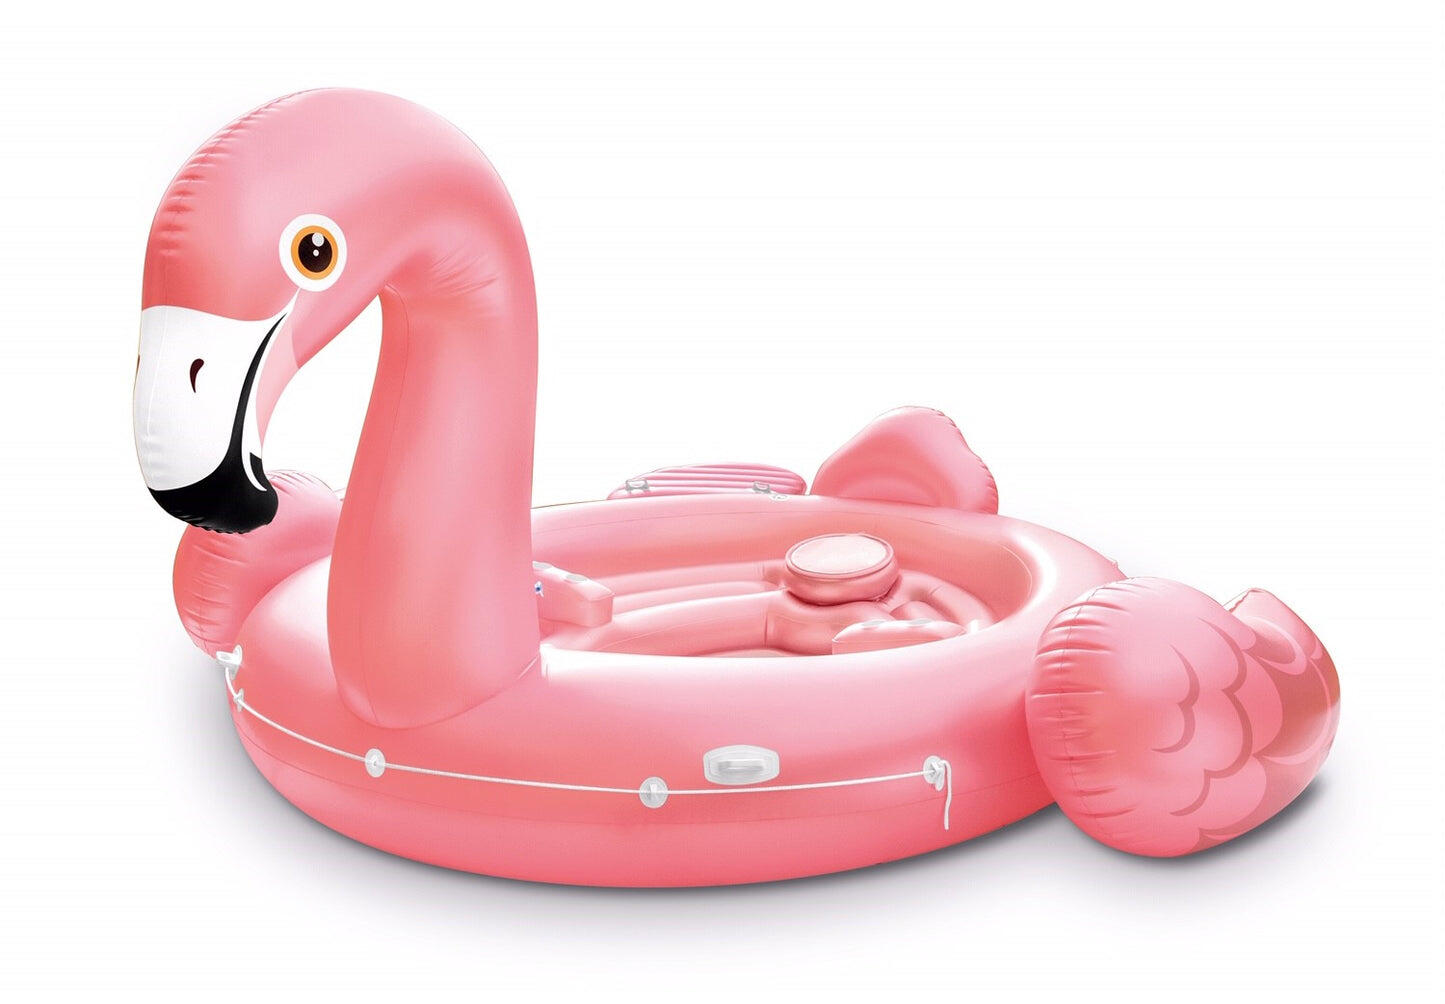 Flamingo Party Island Pool Float